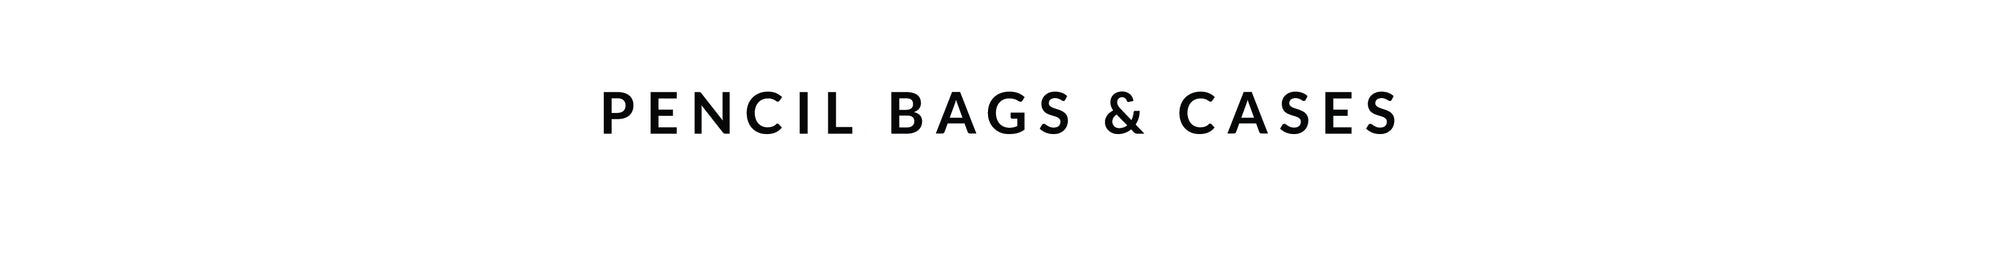 Pencil Bags & Cases